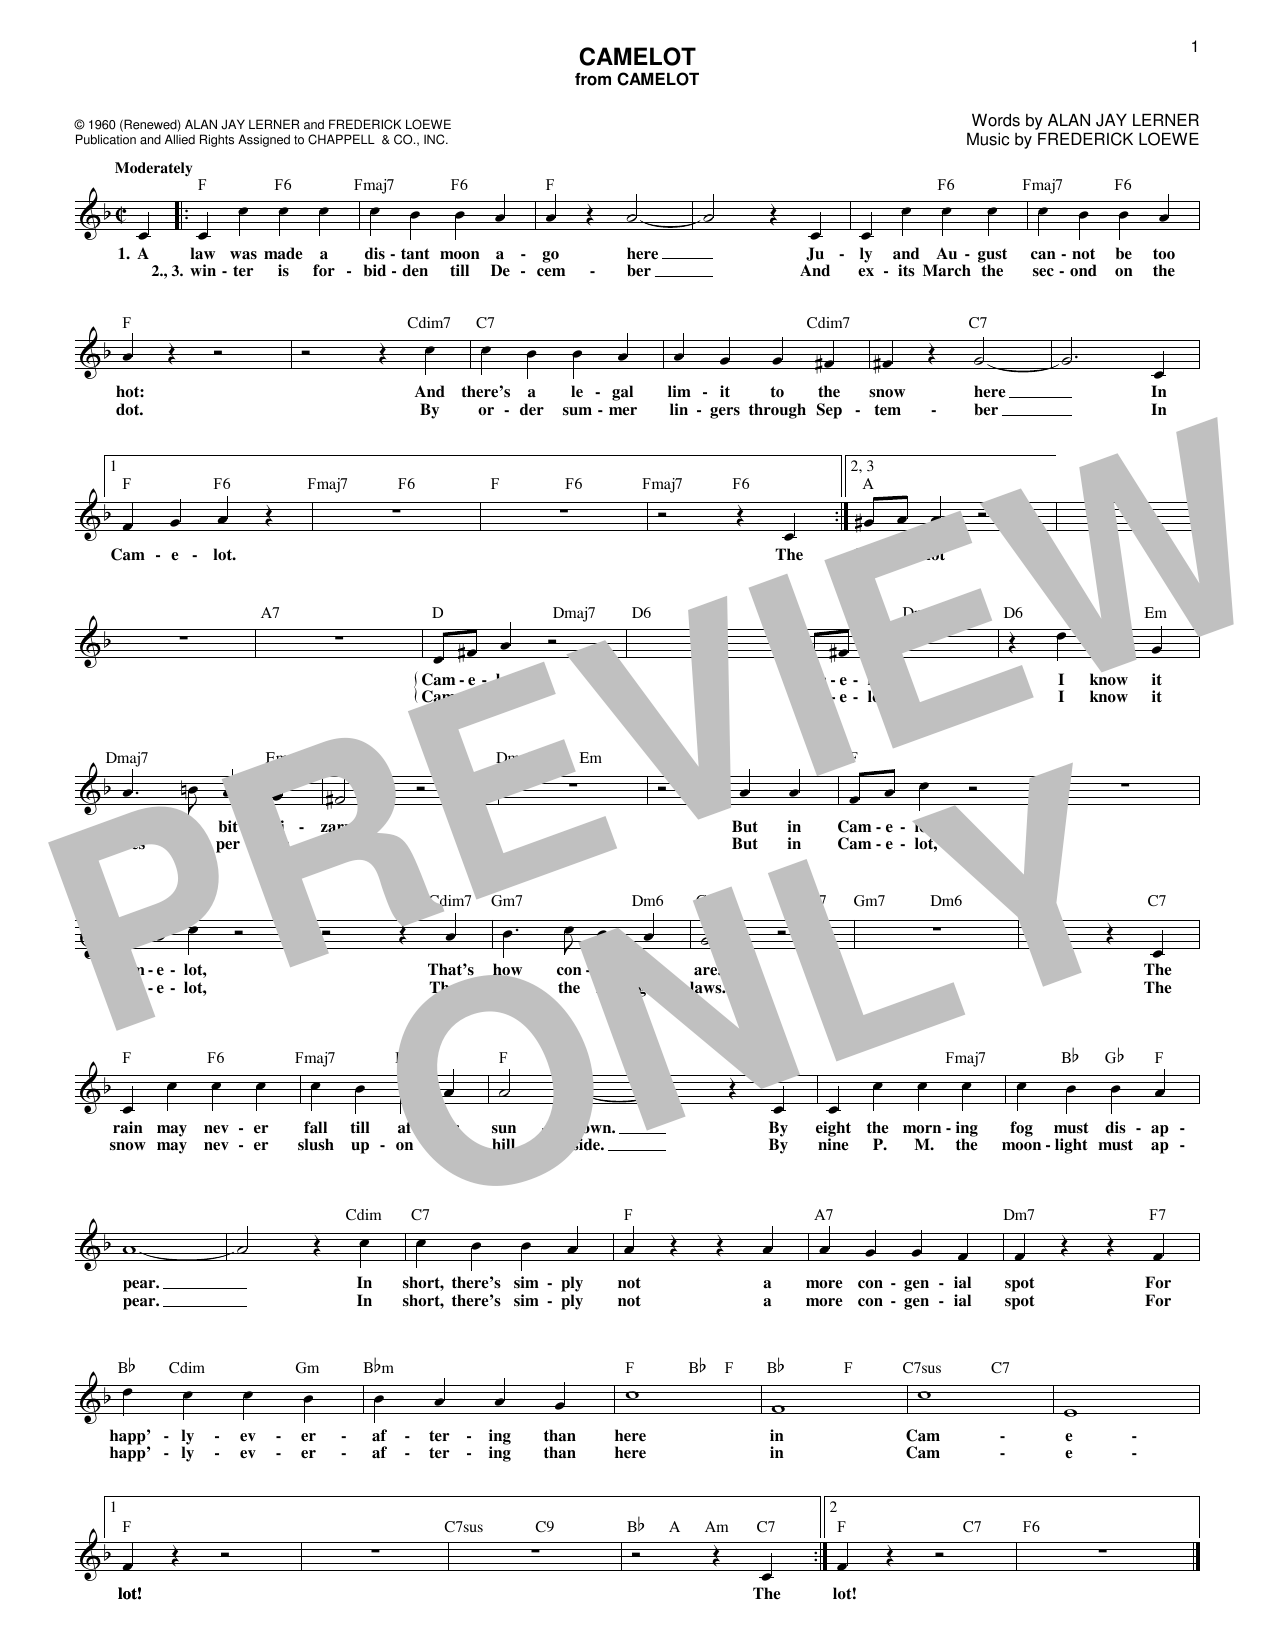 Alan Jay Lerner Camelot Sheet Music Notes & Chords for Melody Line, Lyrics & Chords - Download or Print PDF